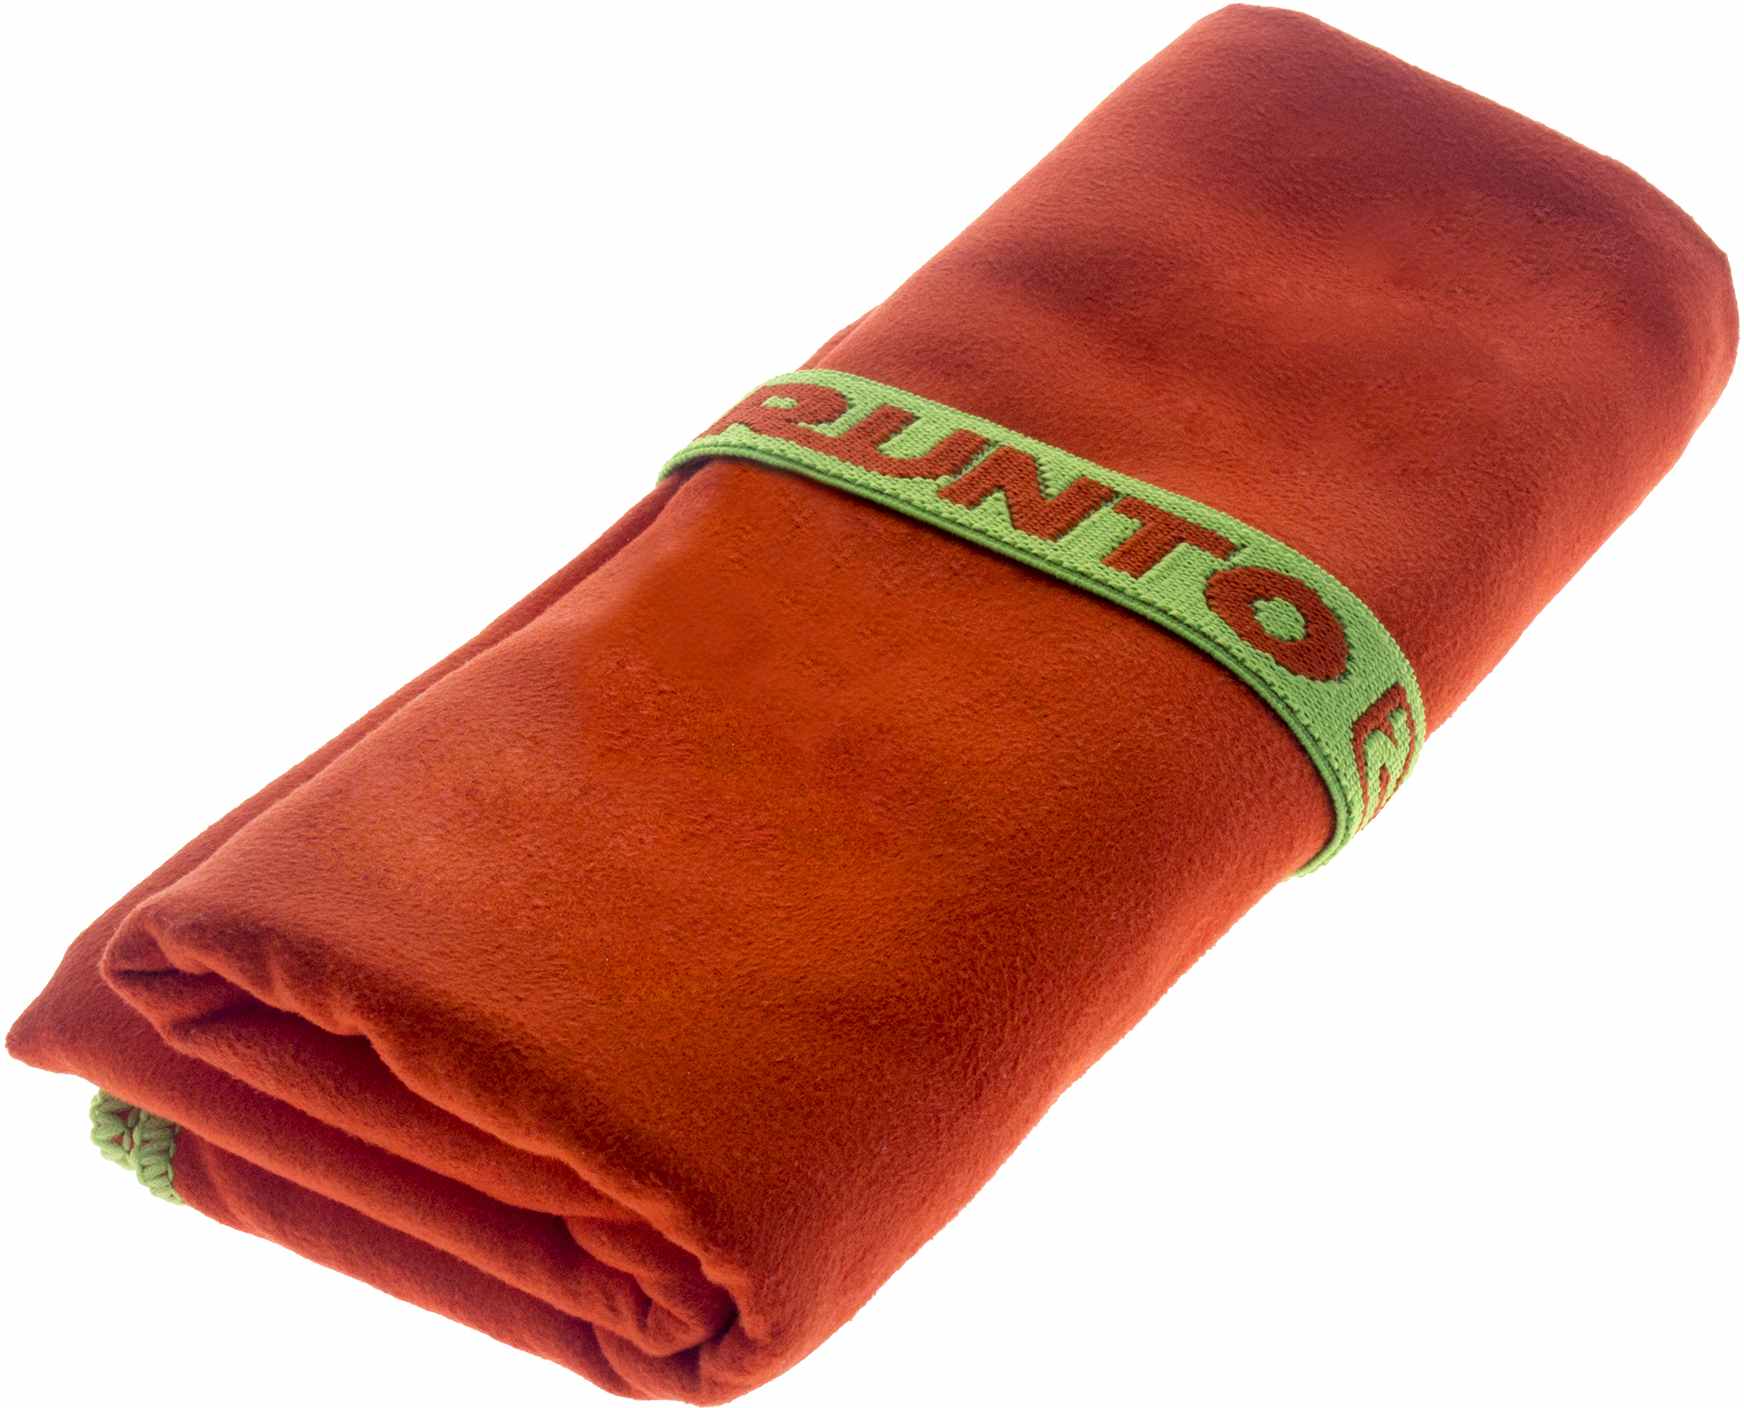 BUNTO 65x90CM - Towel